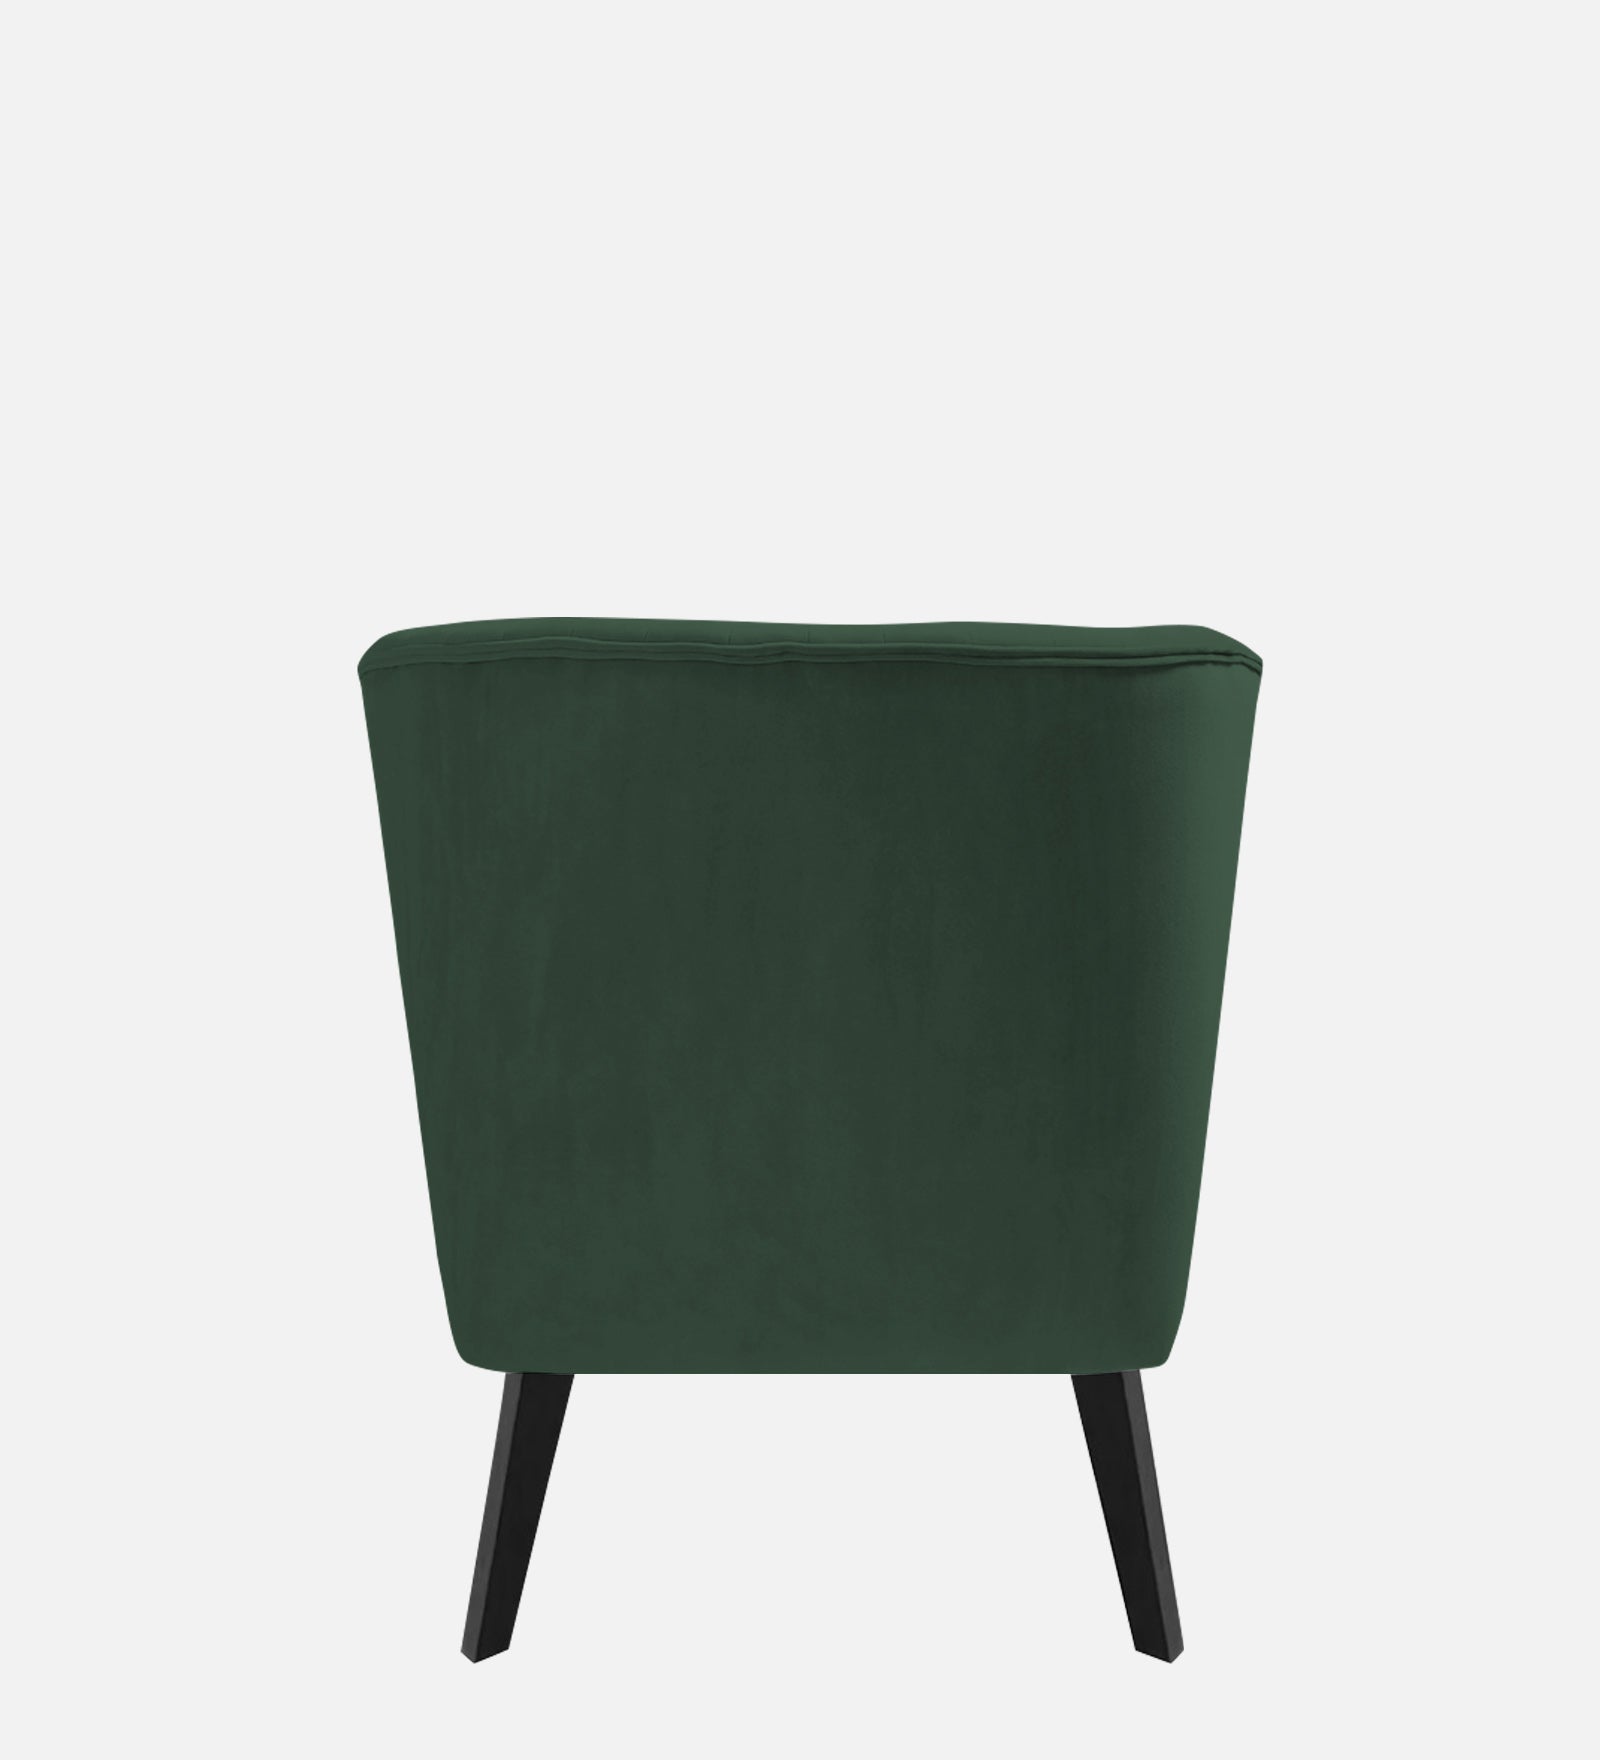 Flora Velvet LHS Chaise Lounger Amazon Green Colour